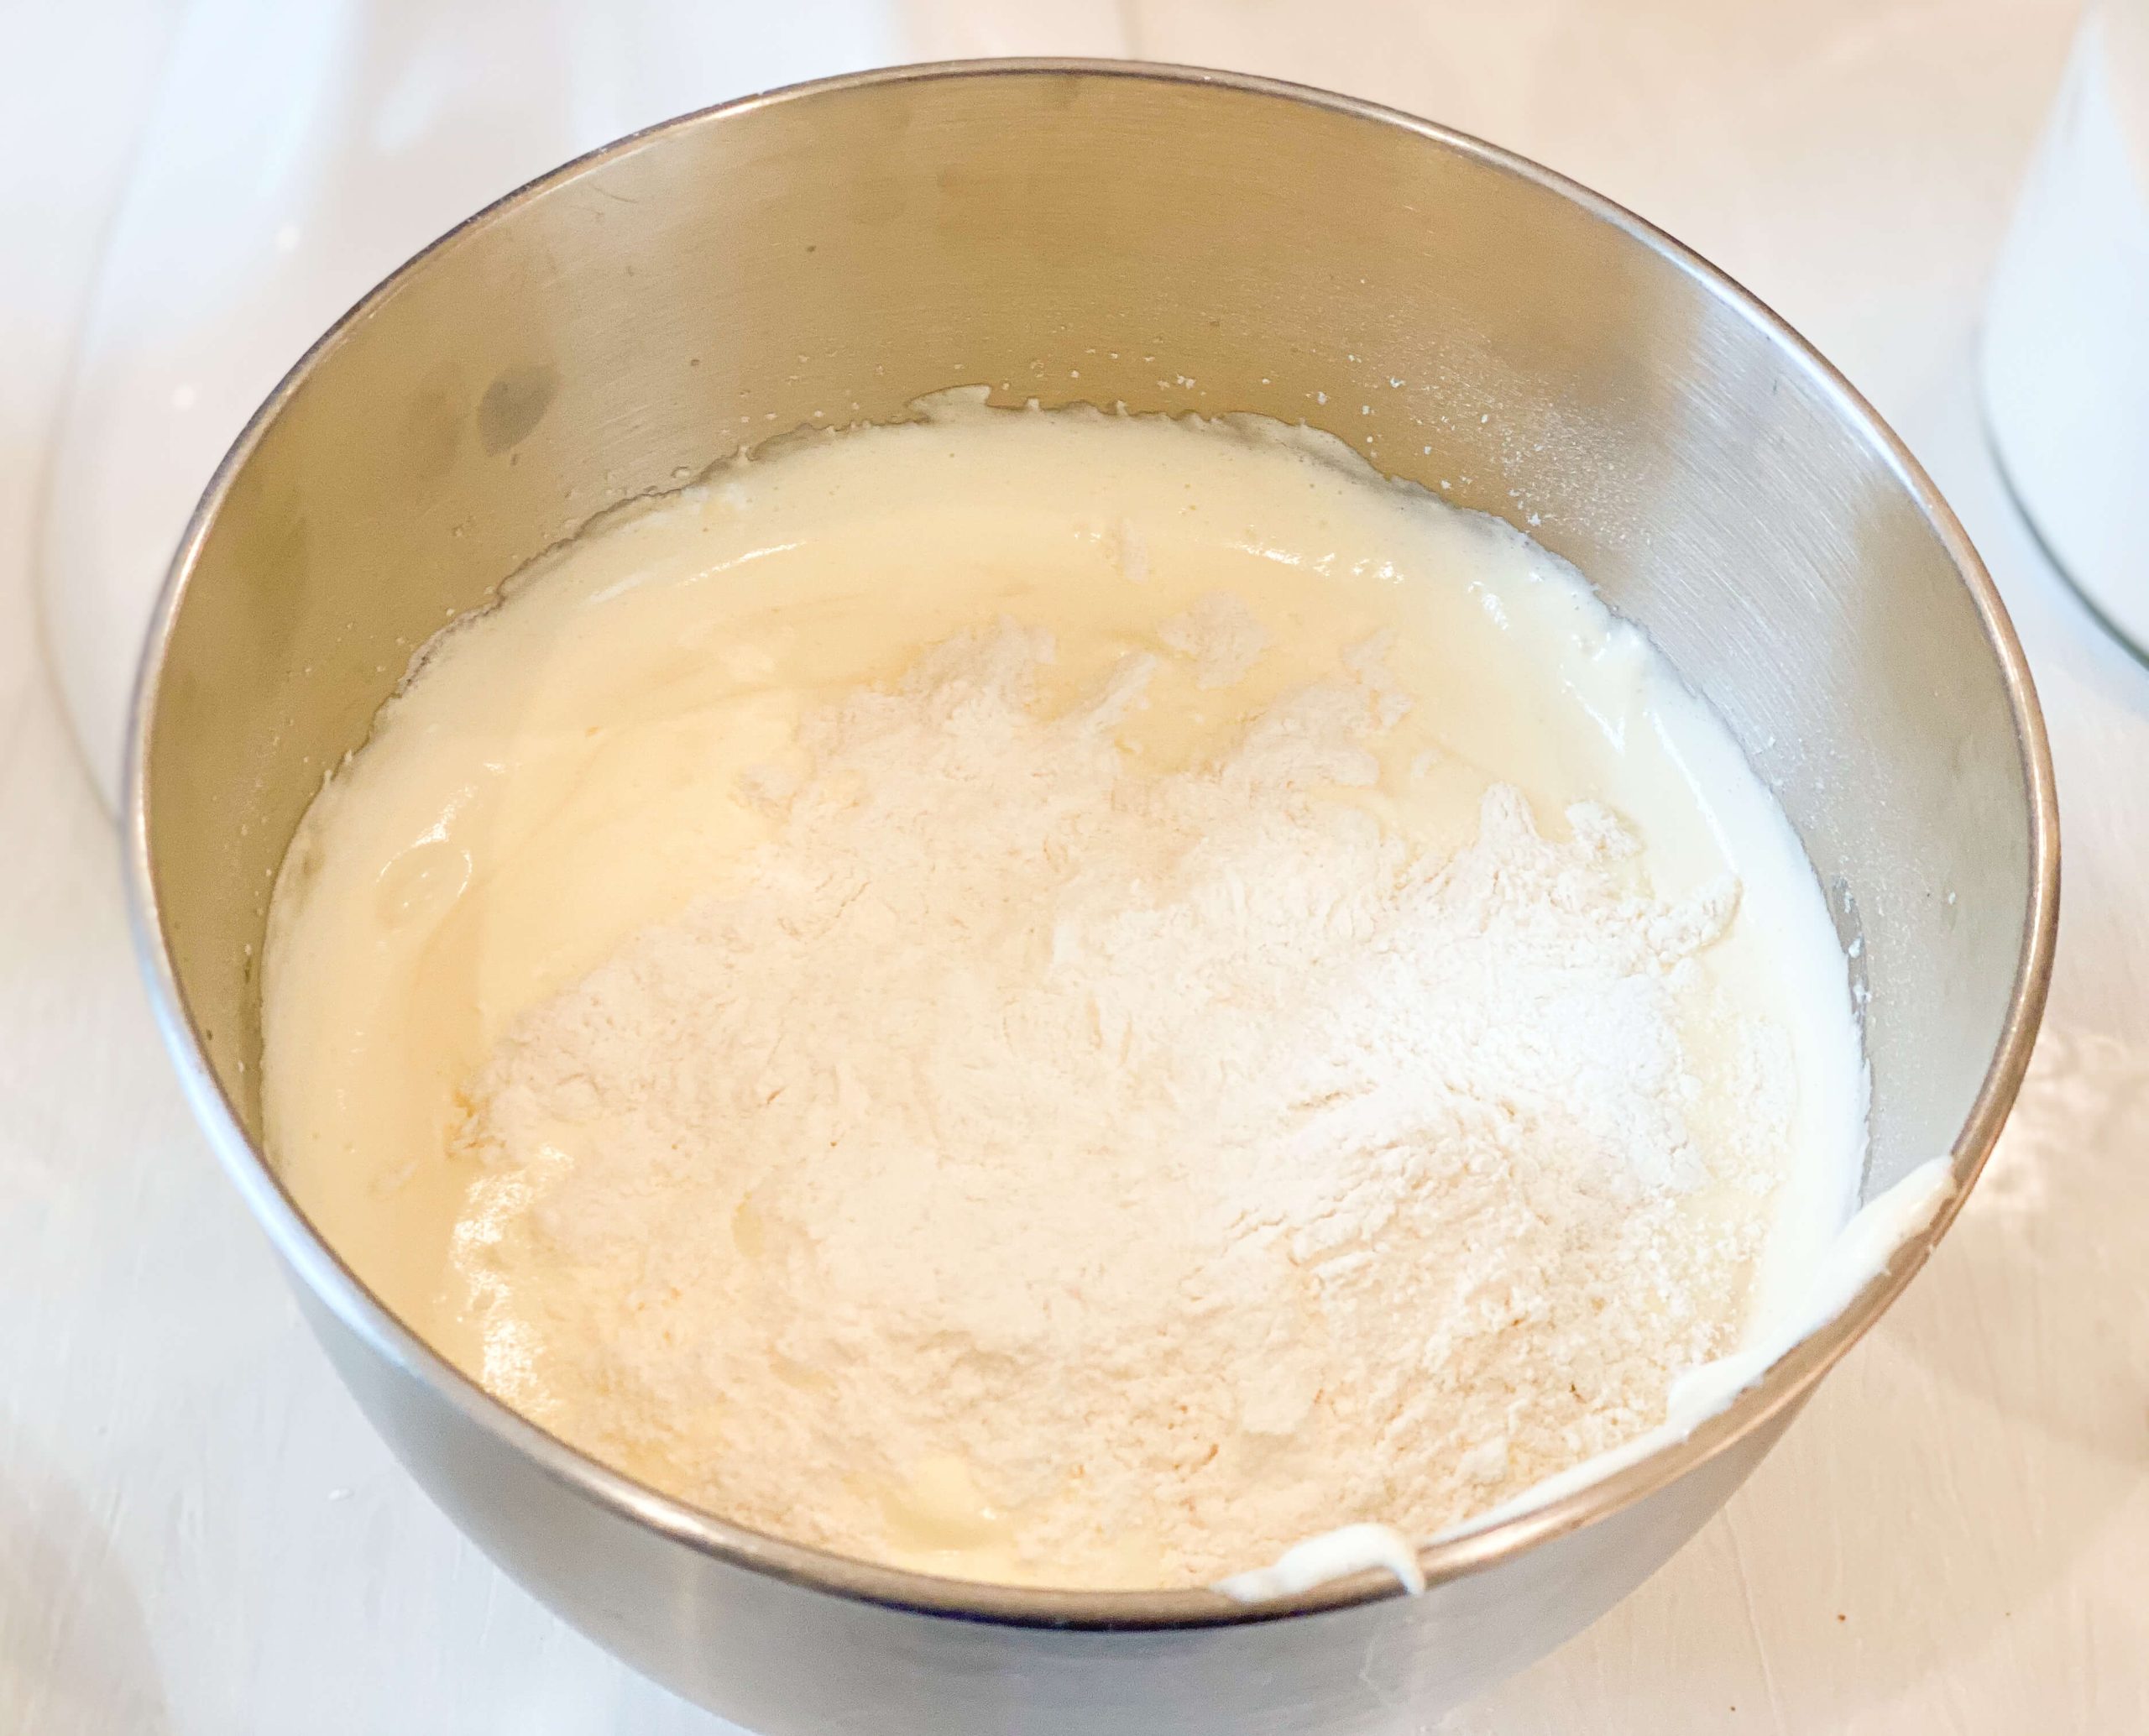 Flour added to cake batter